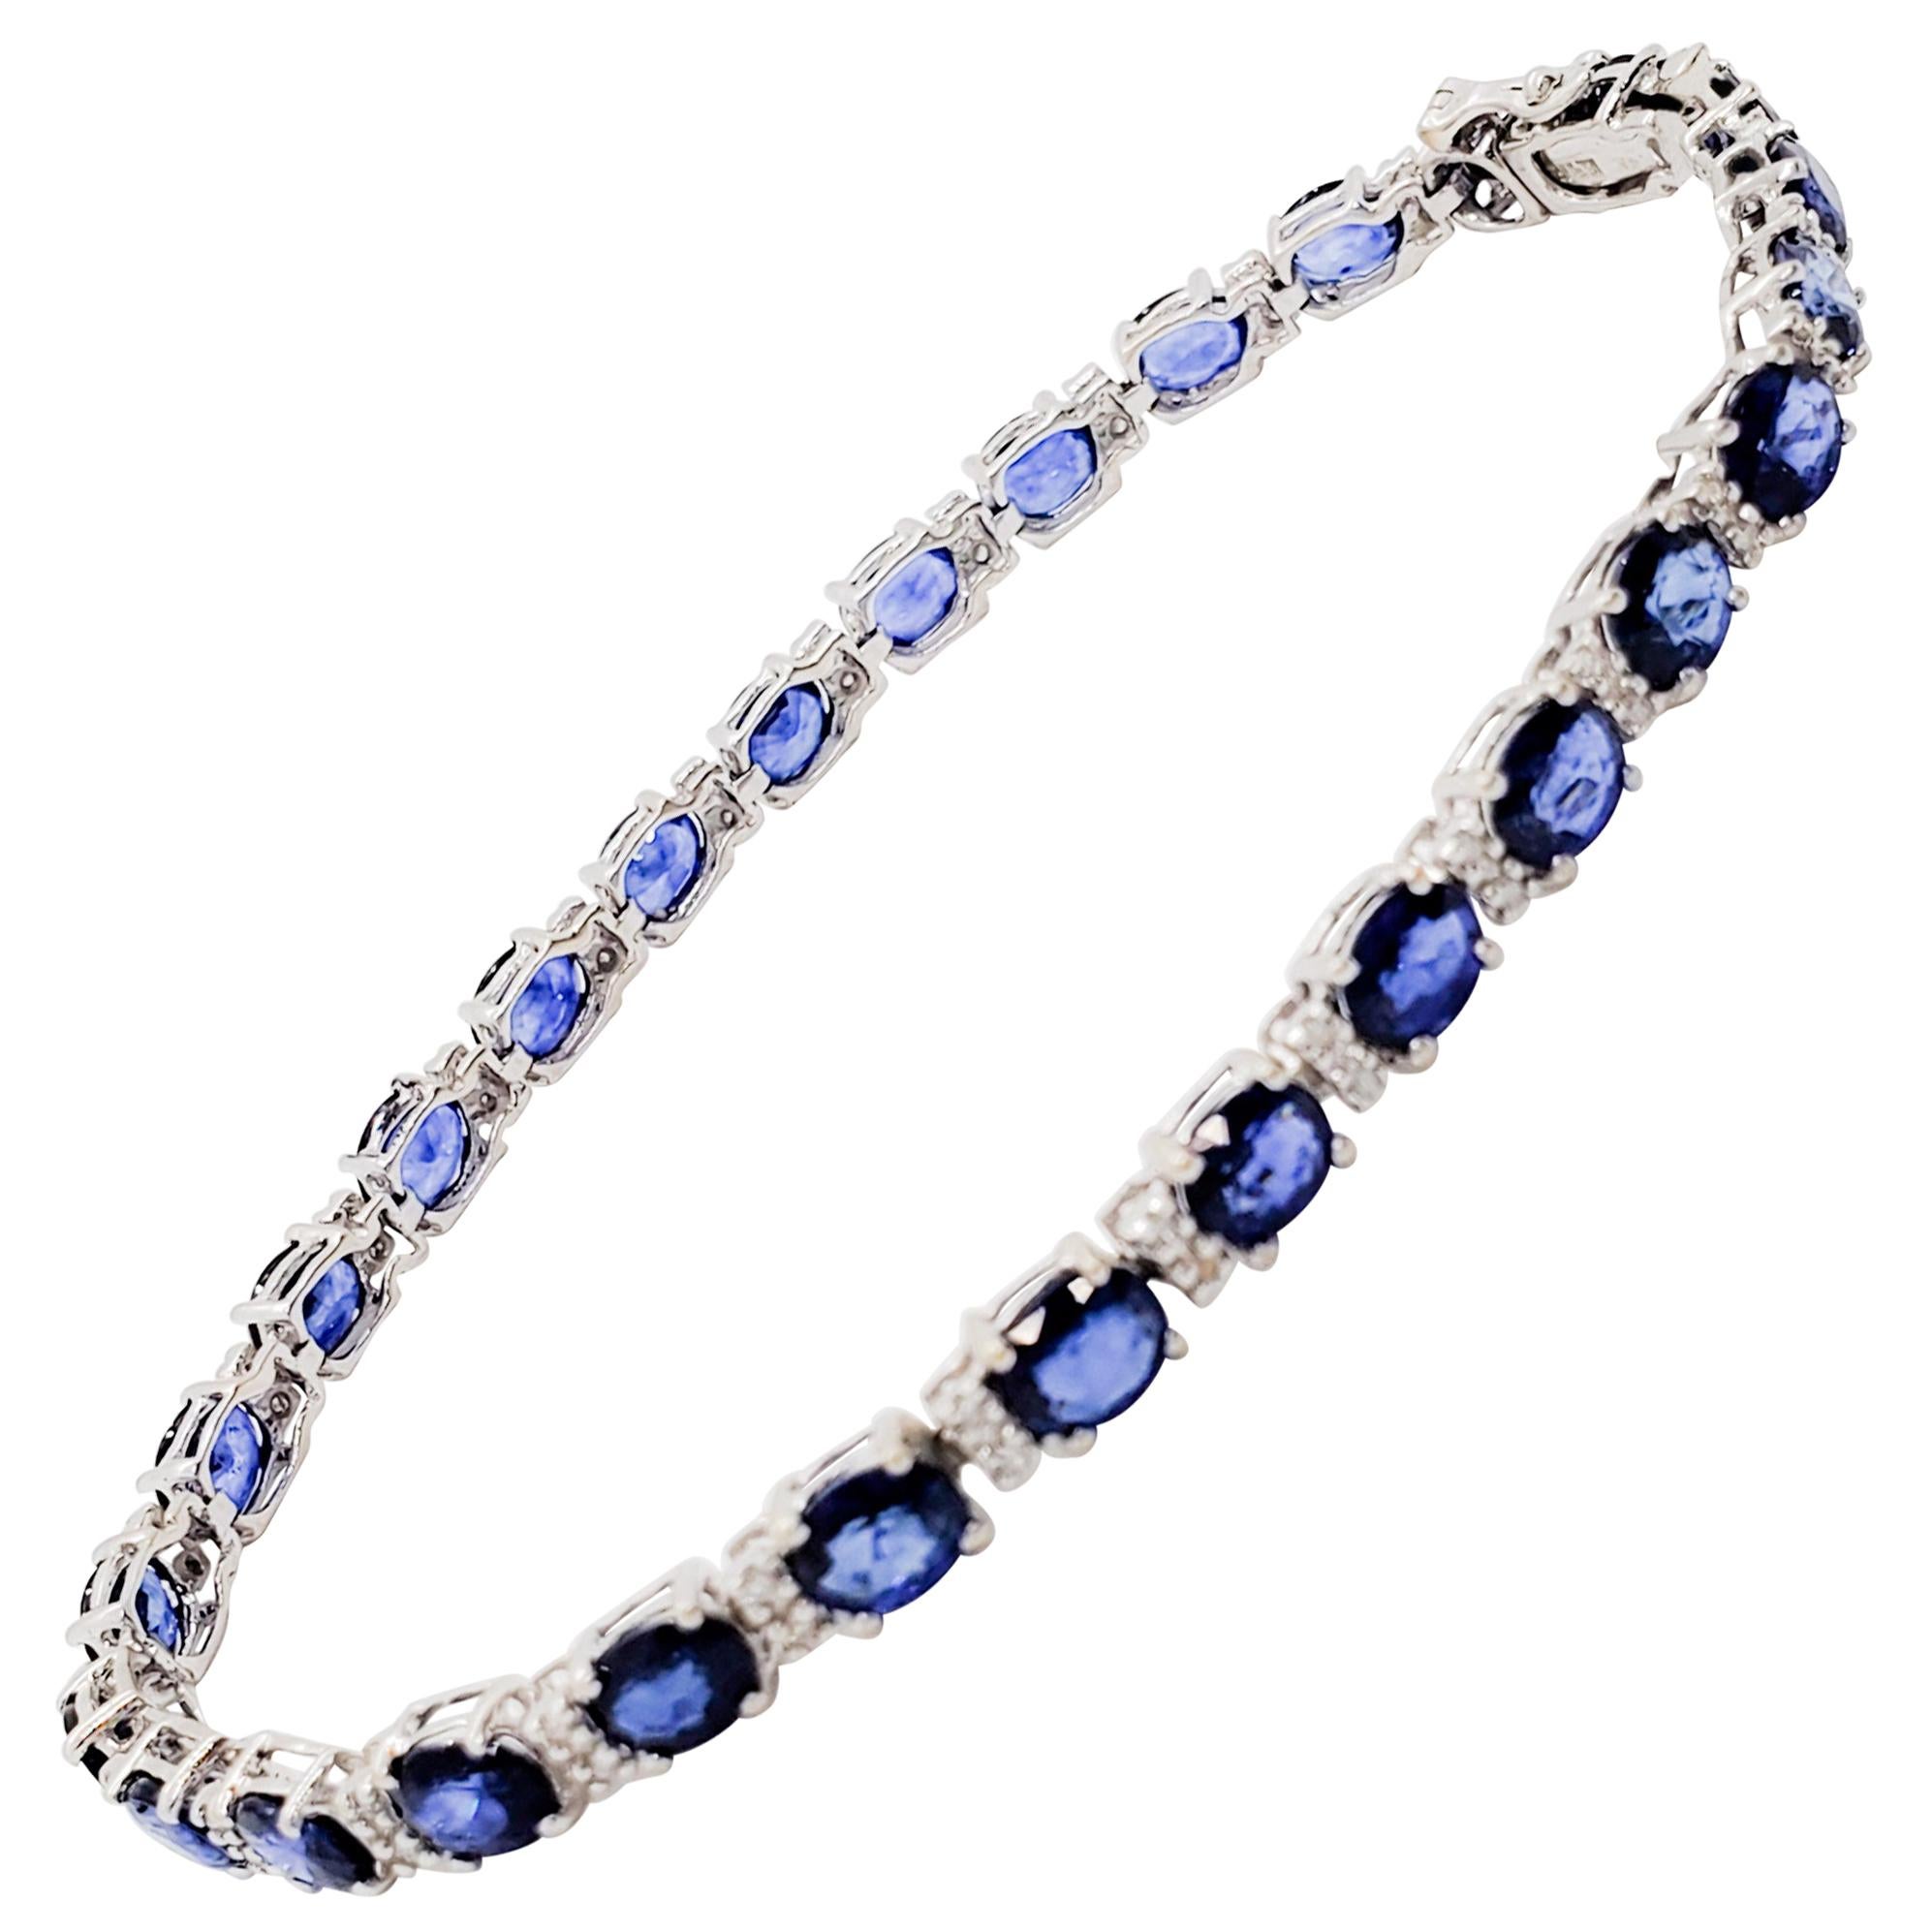 Effy Estate Blue Sapphire and White Diamond Bracelet in 14 Karat White Gold